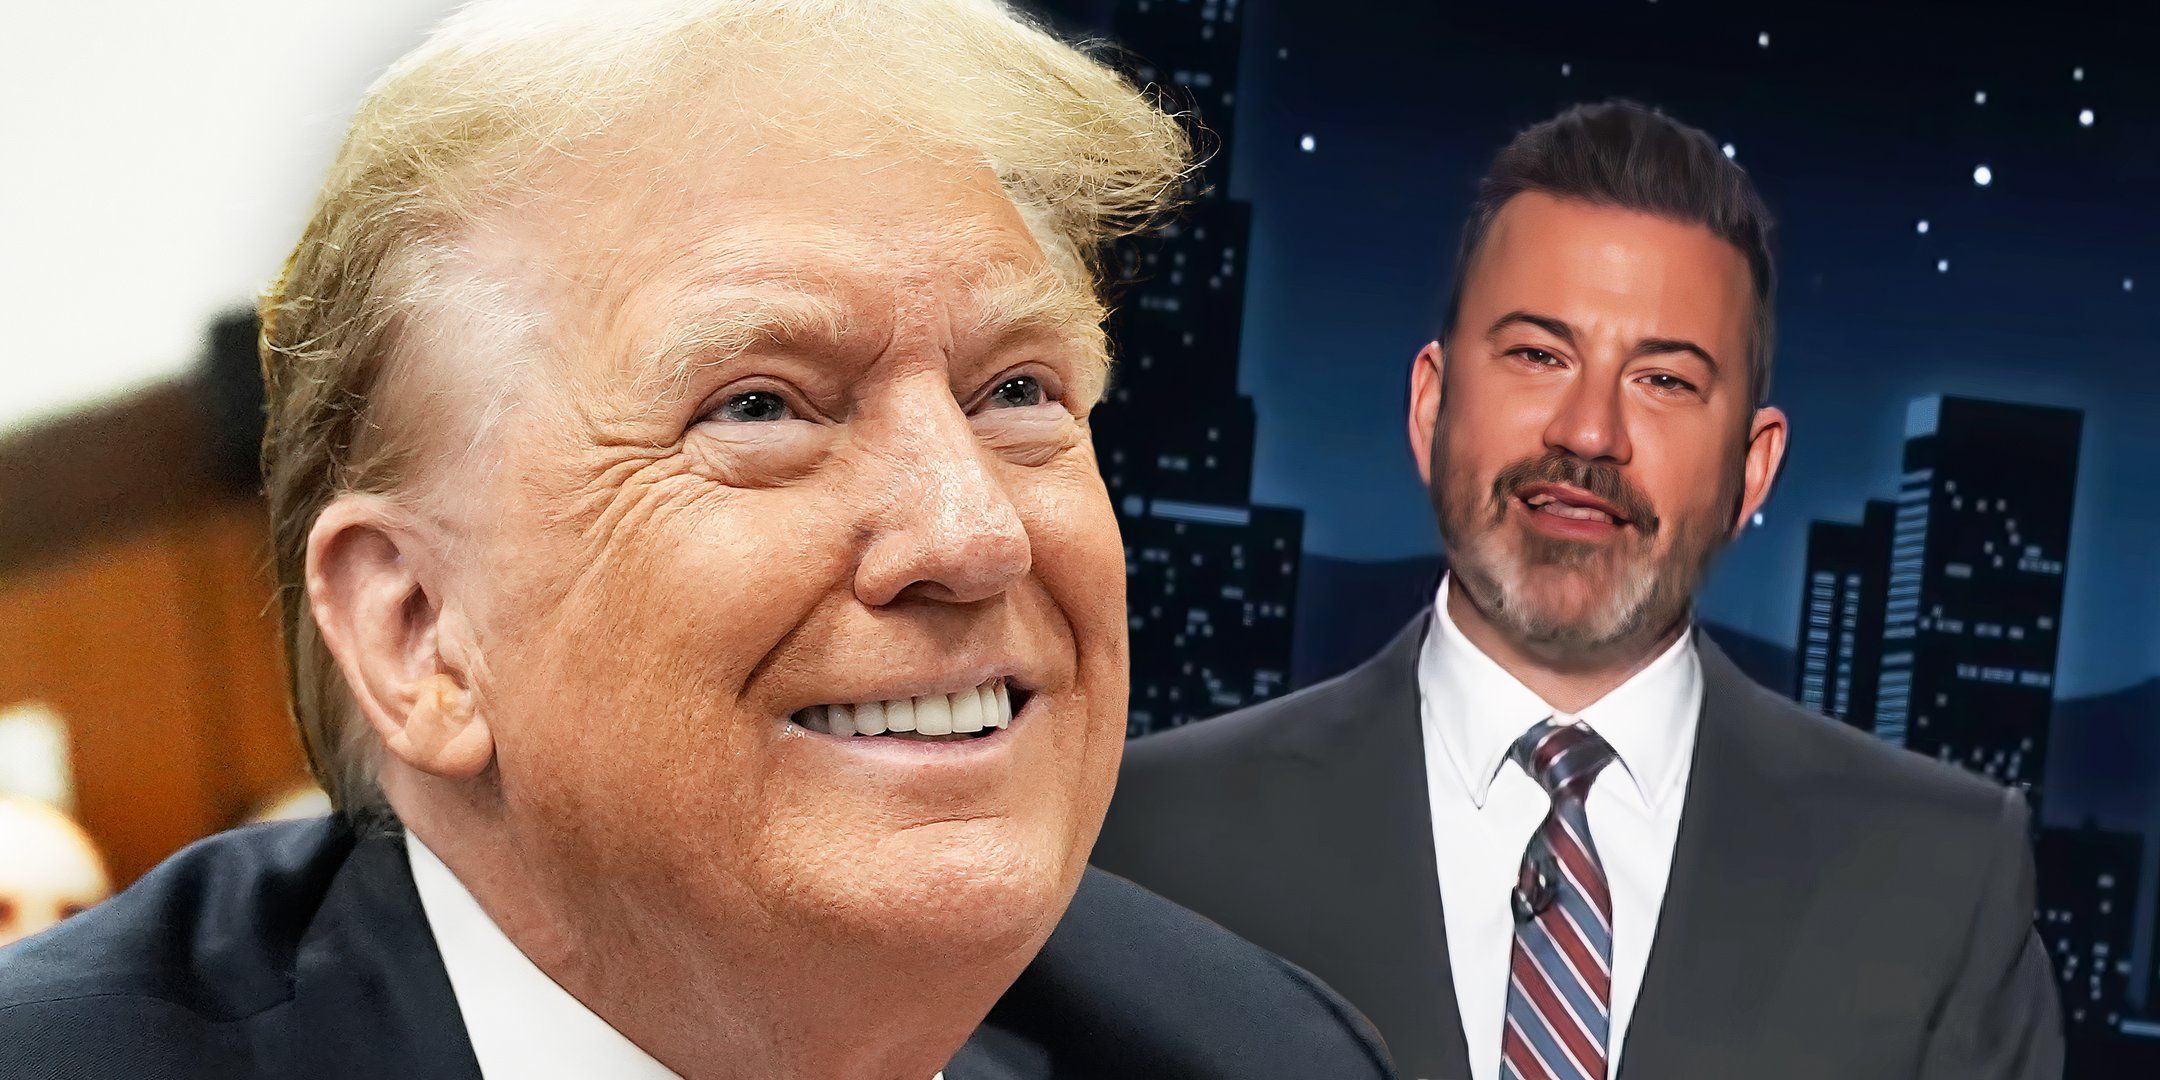 Donald Trump and Jimmy Kimmel jokes